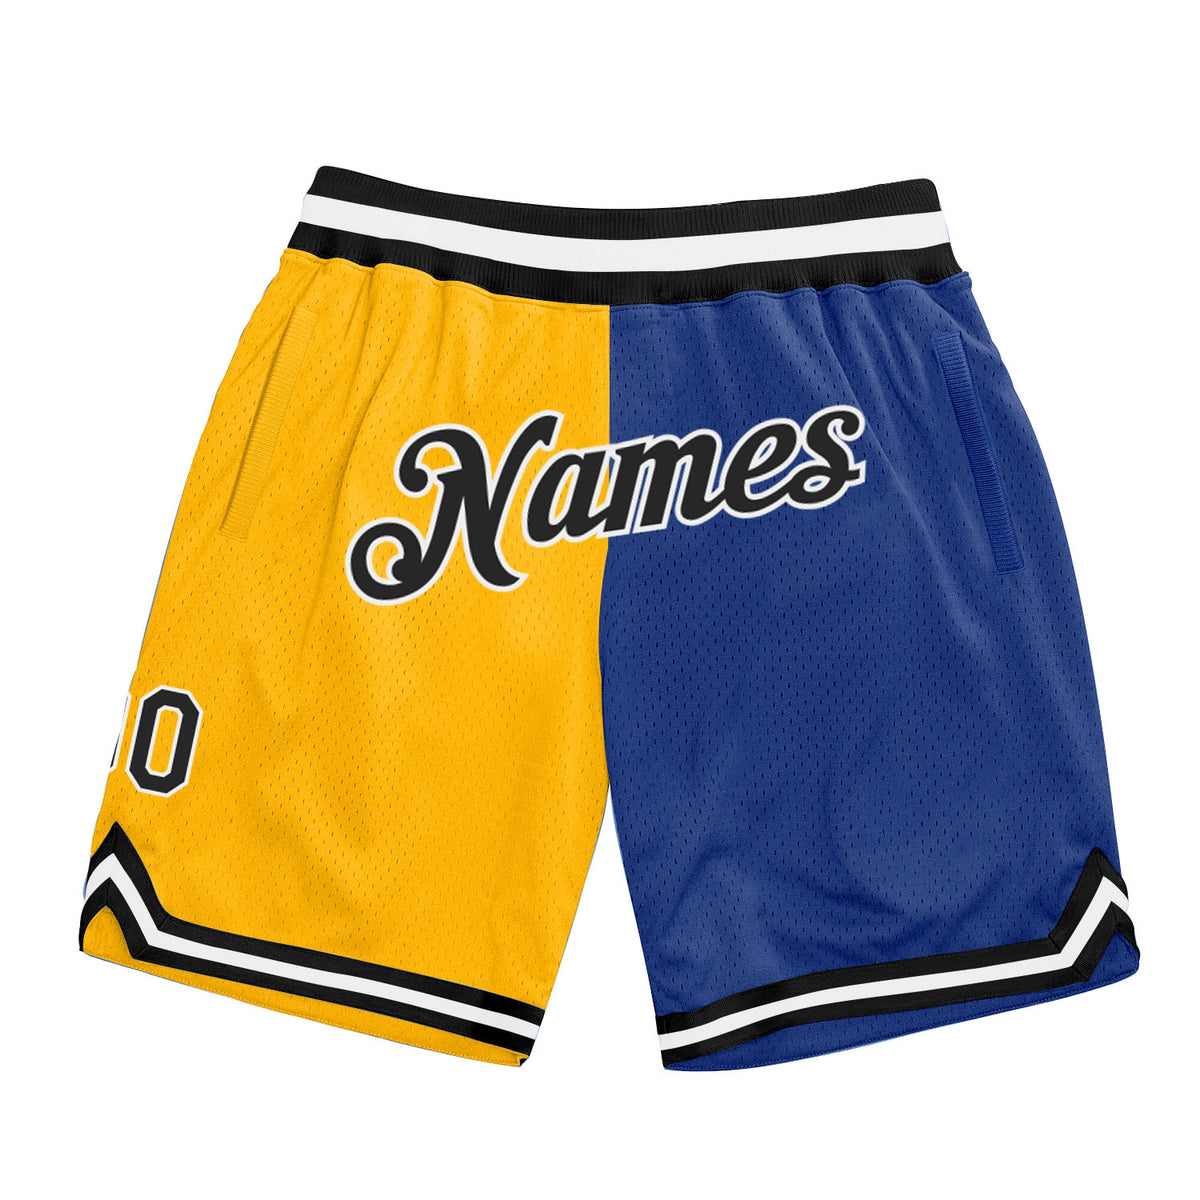 Golden State Warriors Shorts, Warriors Basketball Shorts, Gym Shorts